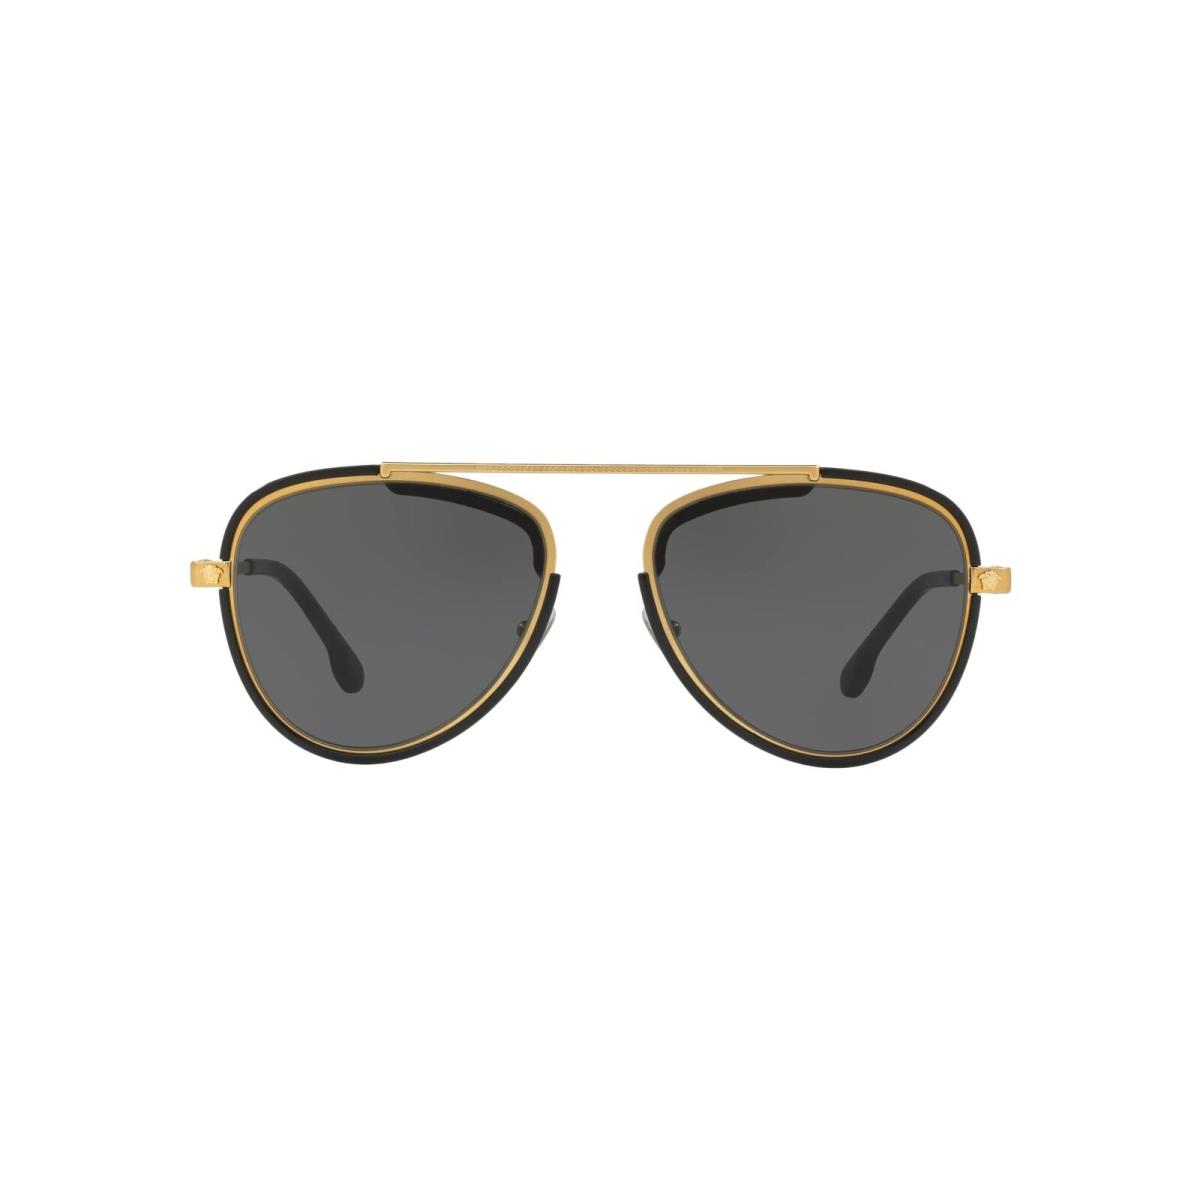 Versace sunglasses Aviator - Gold/Black , Black Frame, Gray Lens